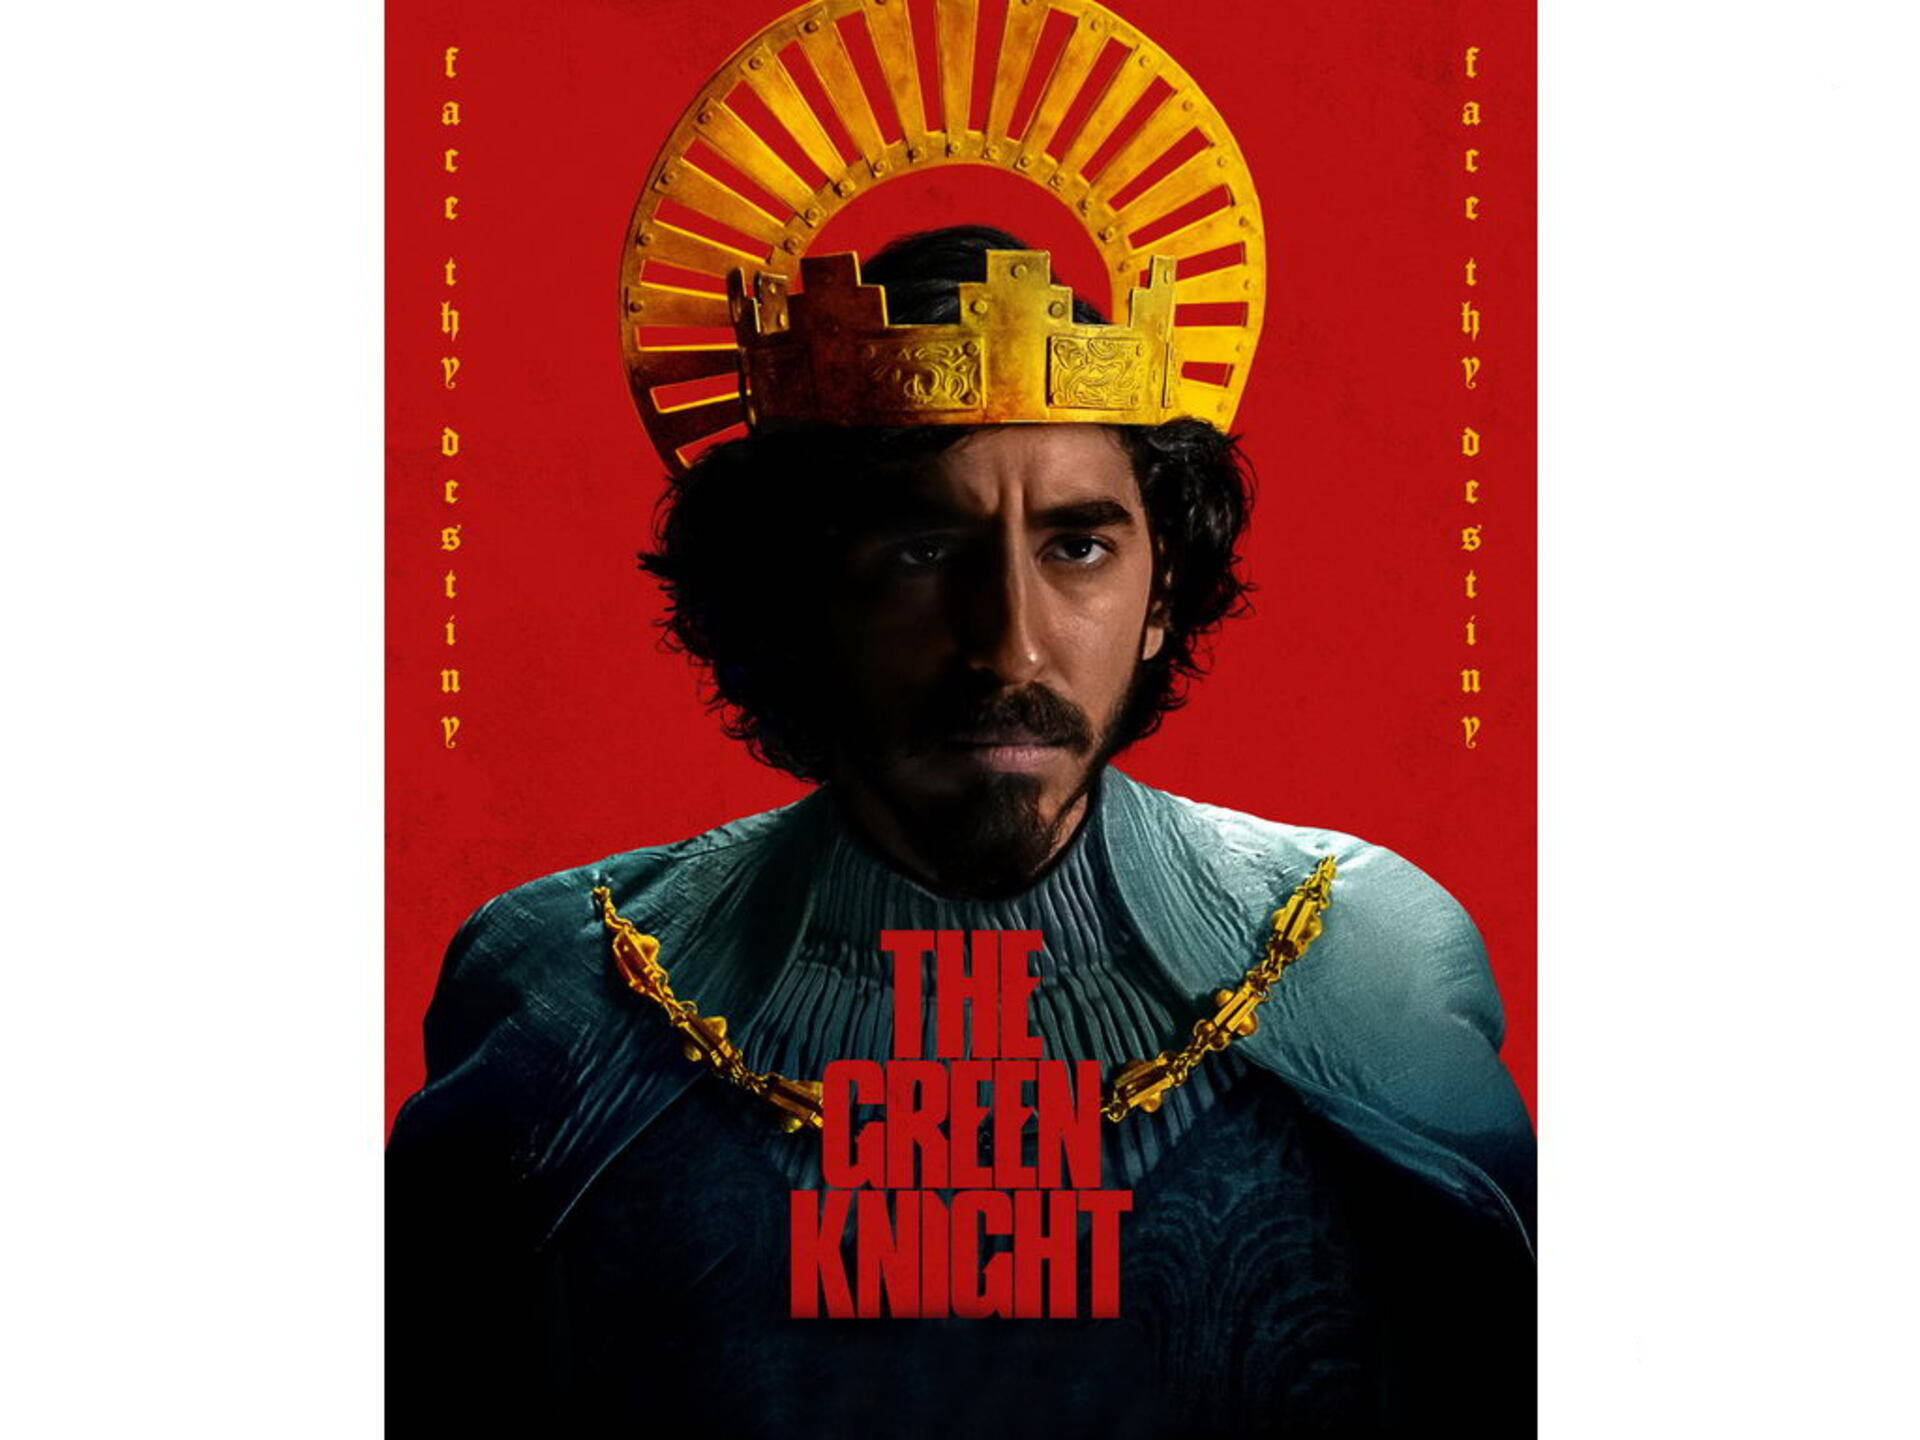 The Green Knight Dev Patel Film Poster Background